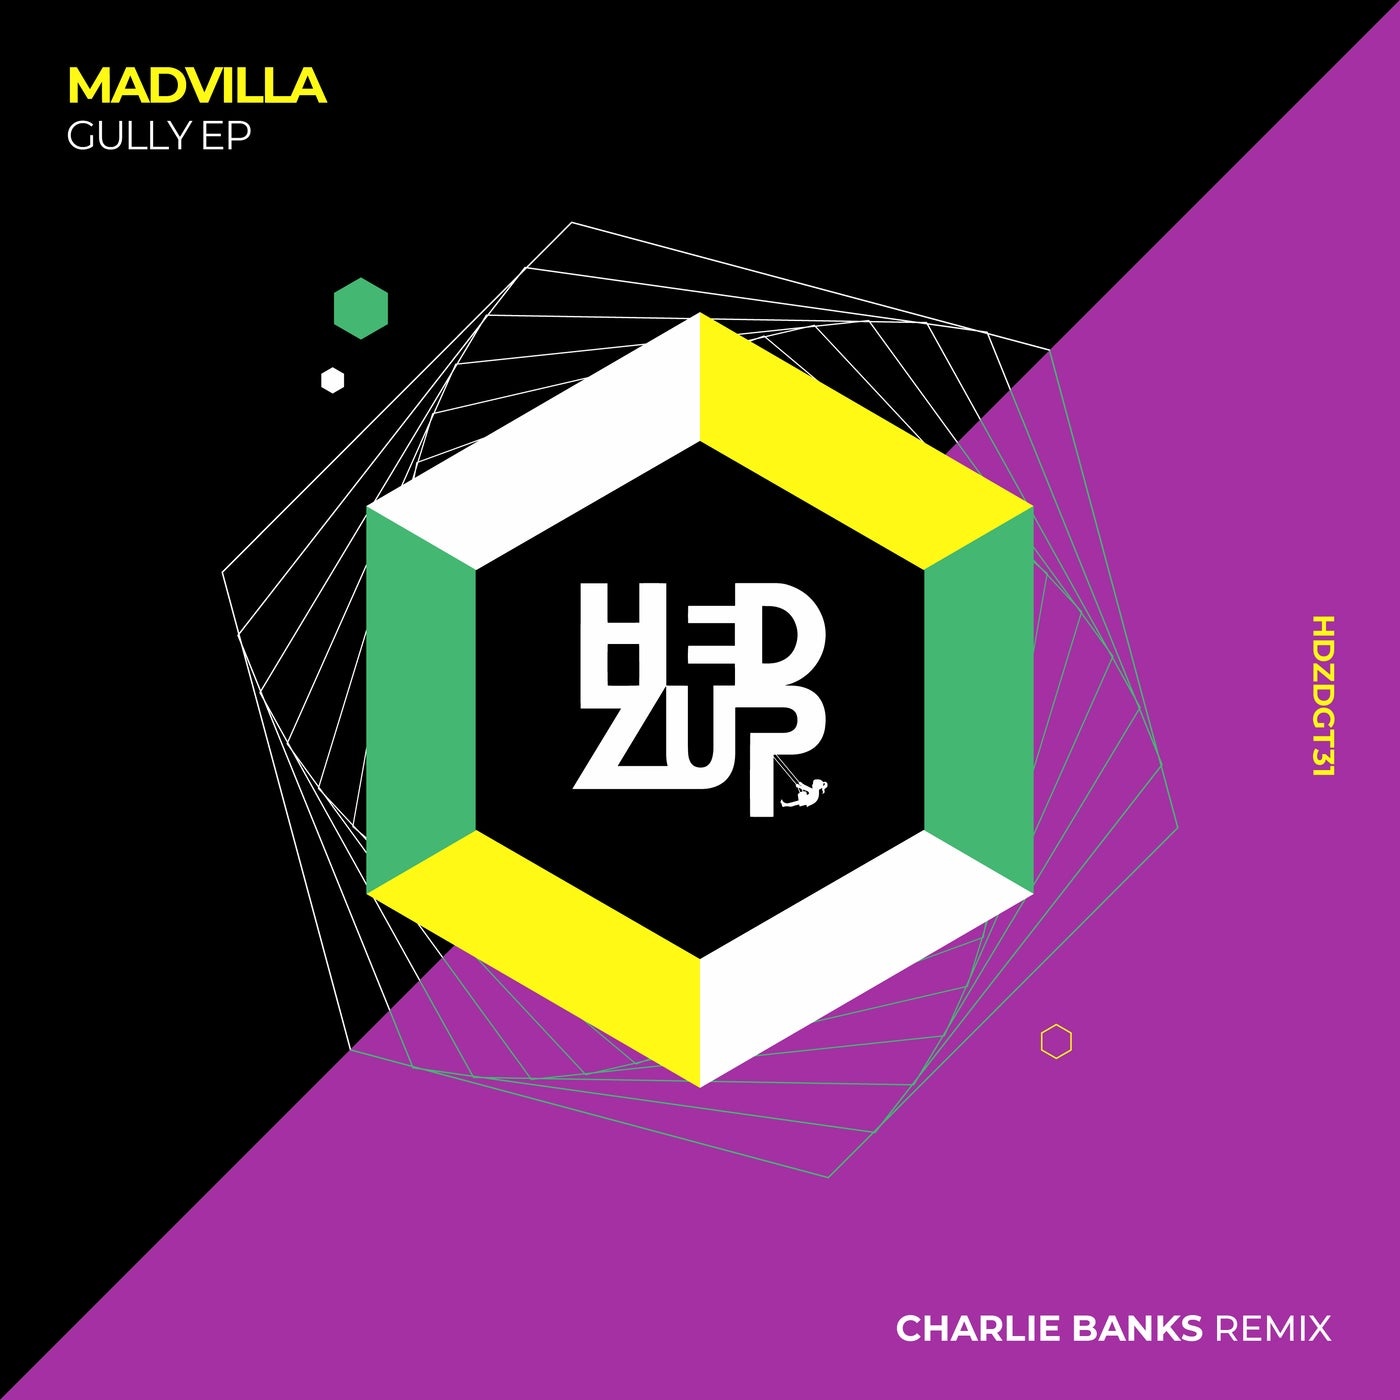 MADVILLA - Gully EP & Charlie Banks remix [HDZDGT31]